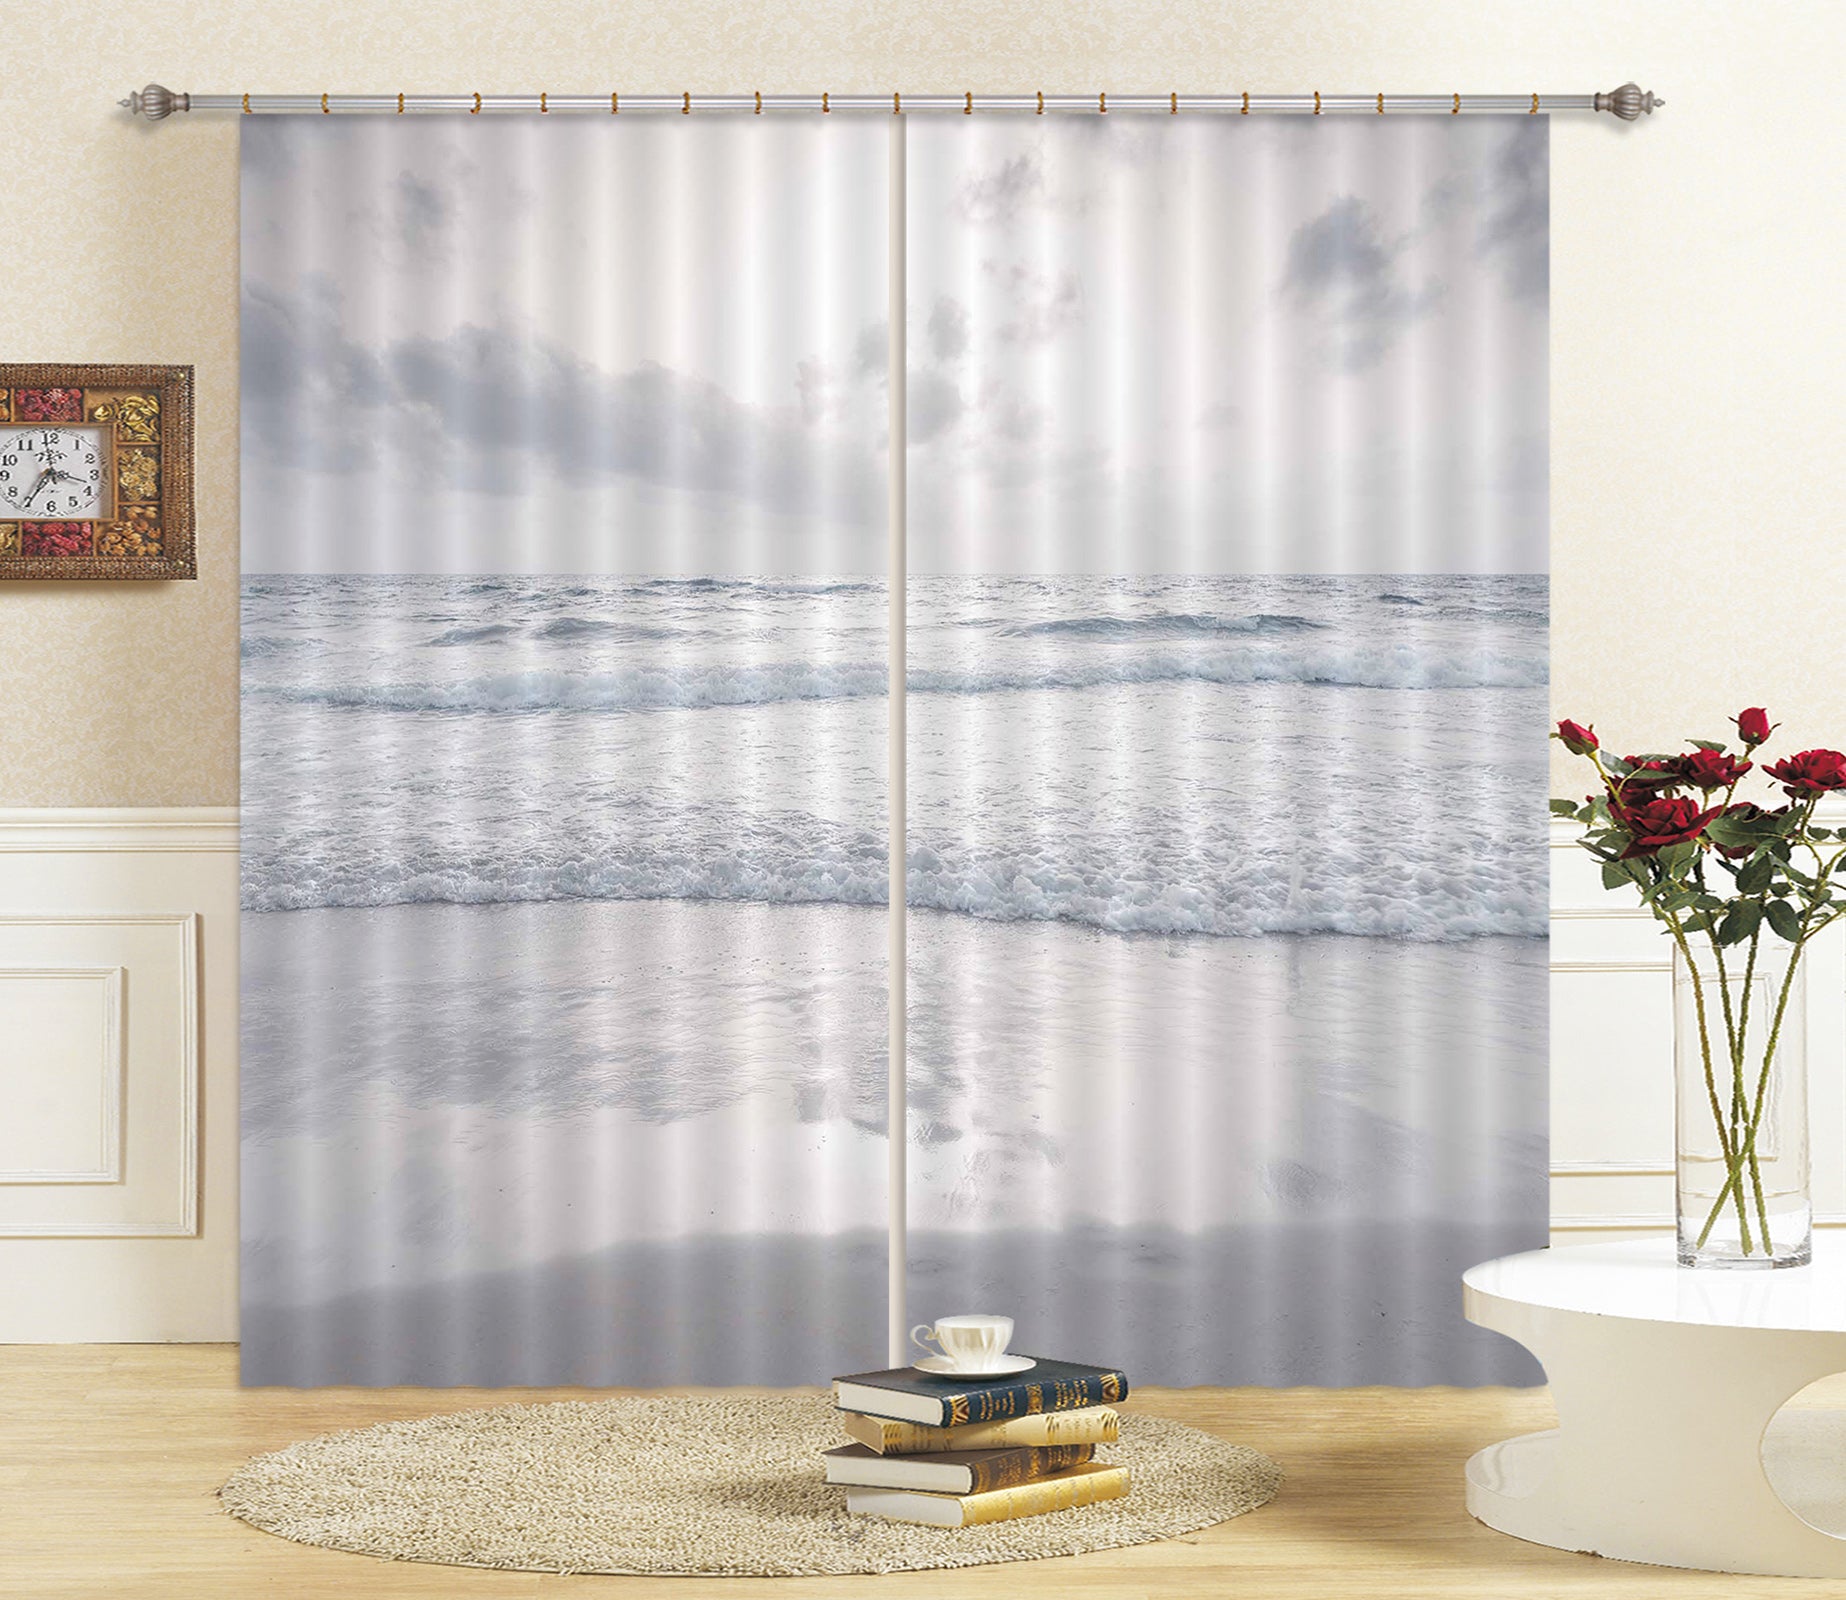 3D White Waves 030 Assaf Frank Curtain Curtains Drapes